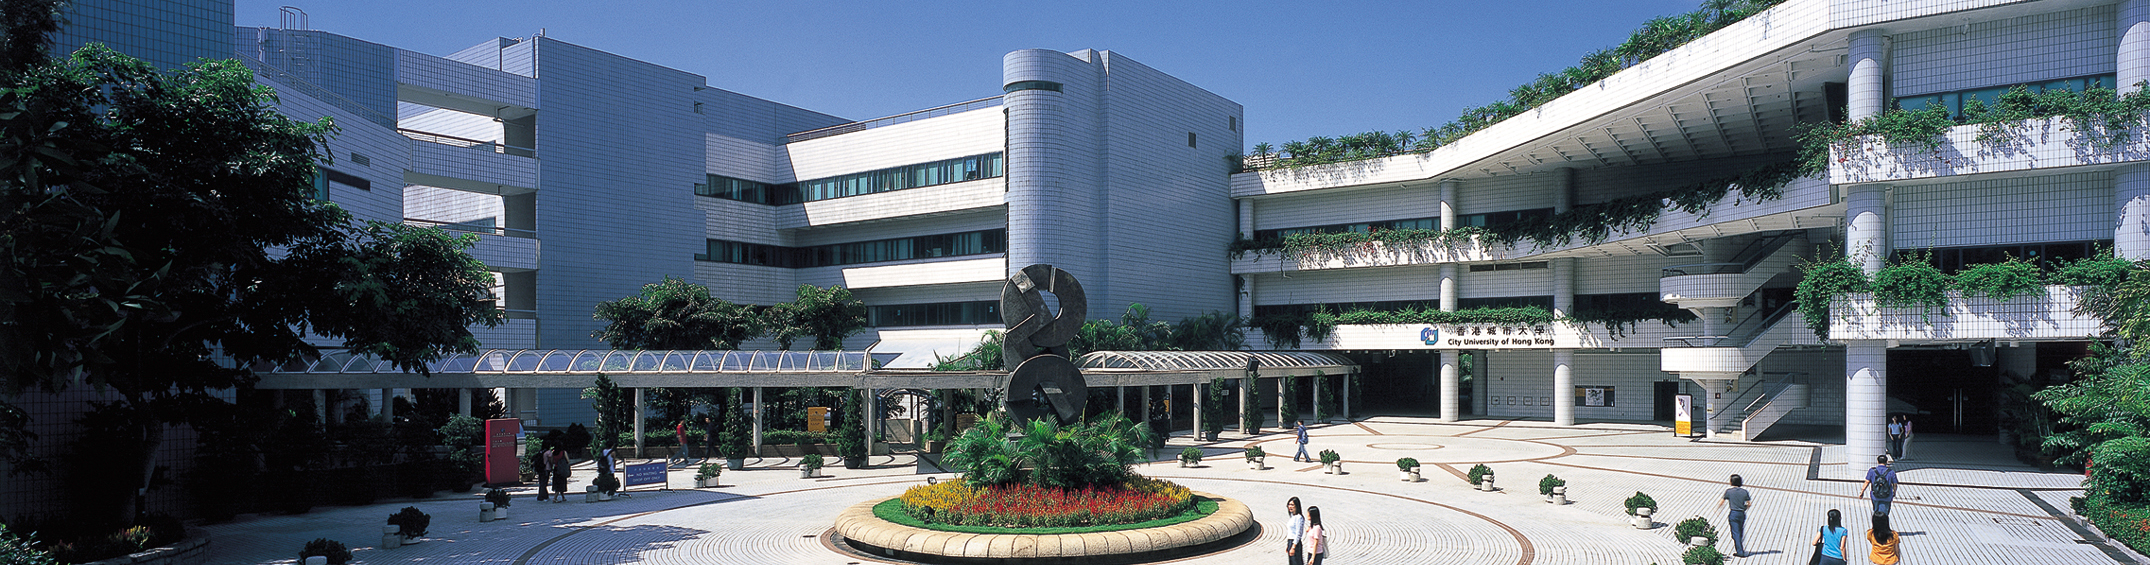 "CityU HK Campus"